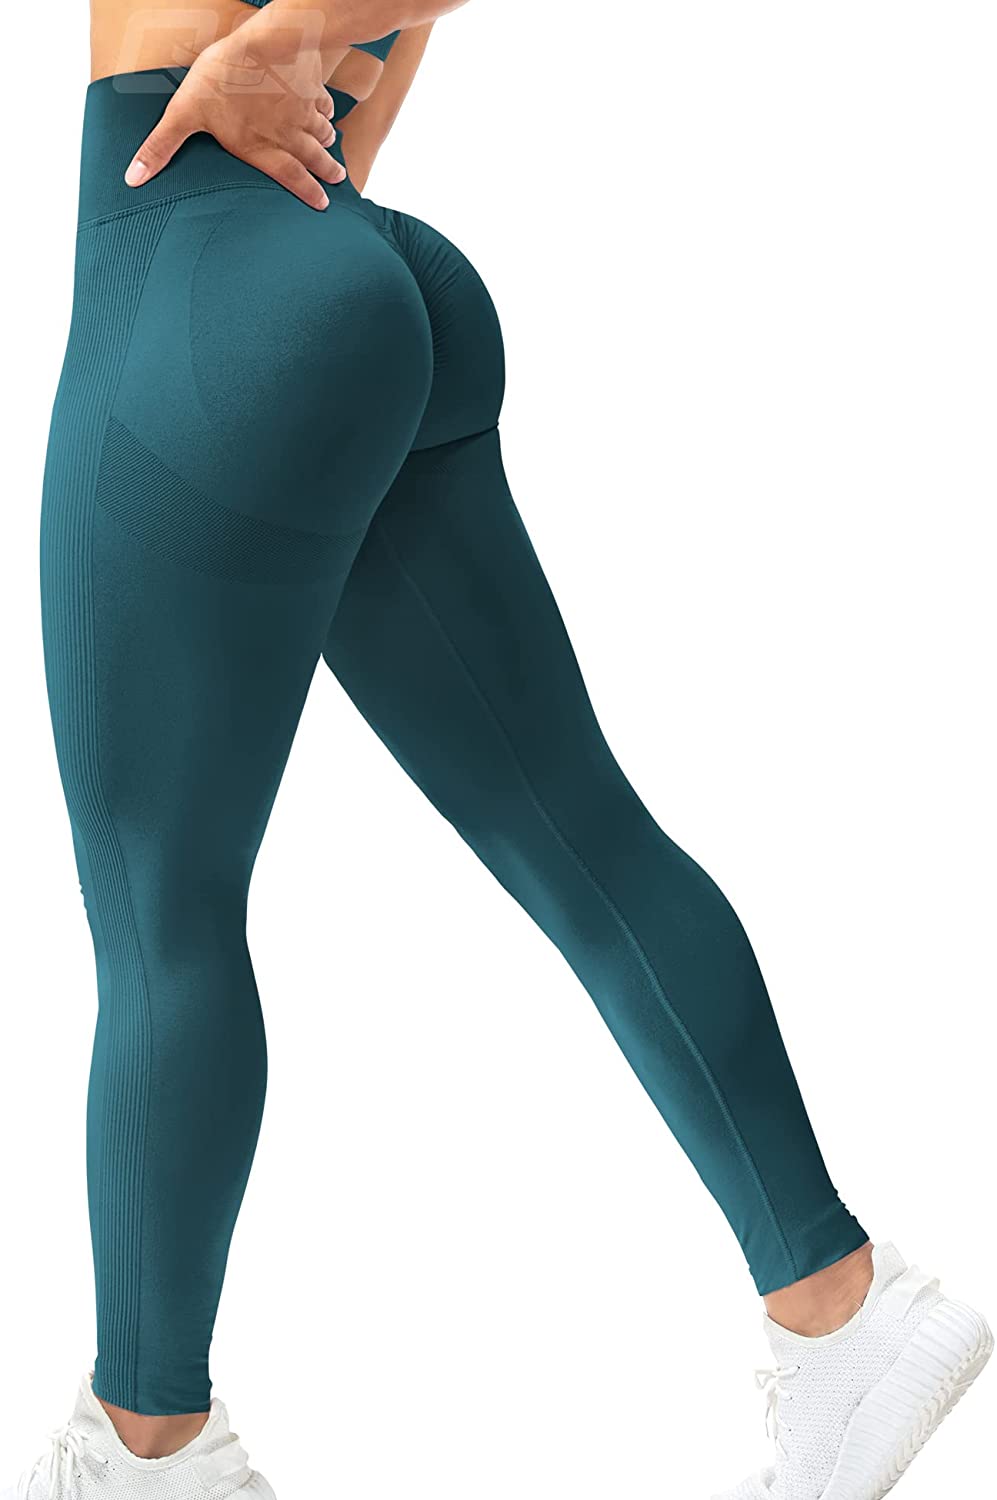 QOQ V Back Leggings for Women Scrunch Butt Lifting Workout